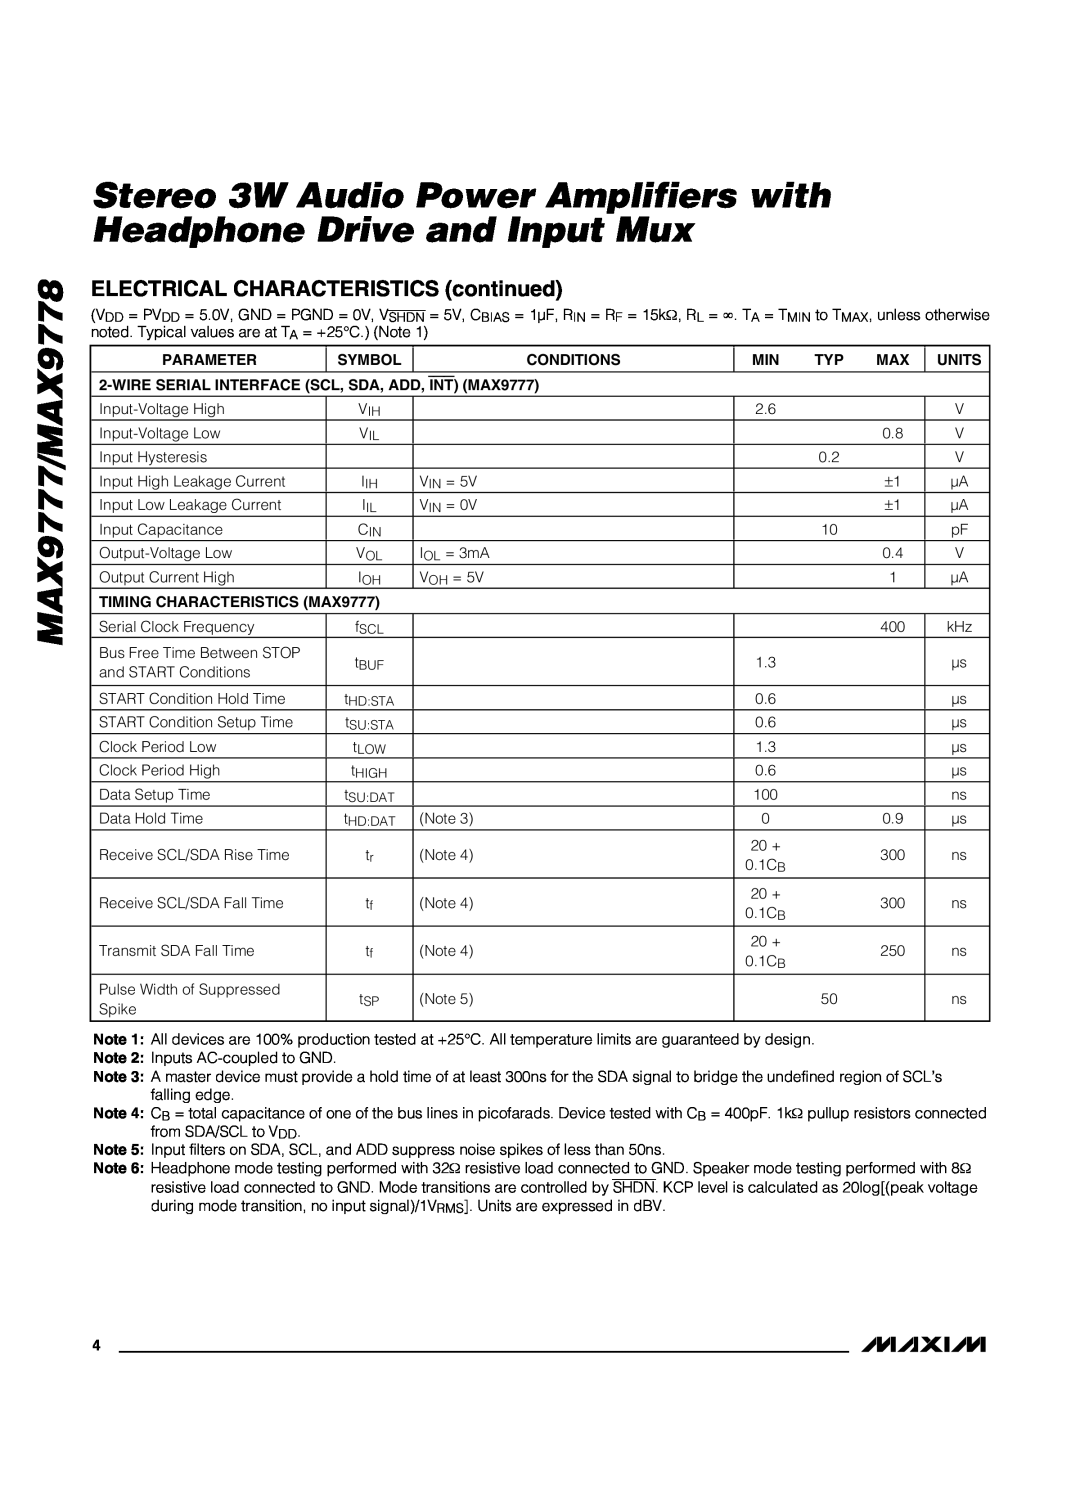 Maxim manual MAX9777/MAX9778, ELECTRICAL CHARACTERISTICS continued, Parameter 